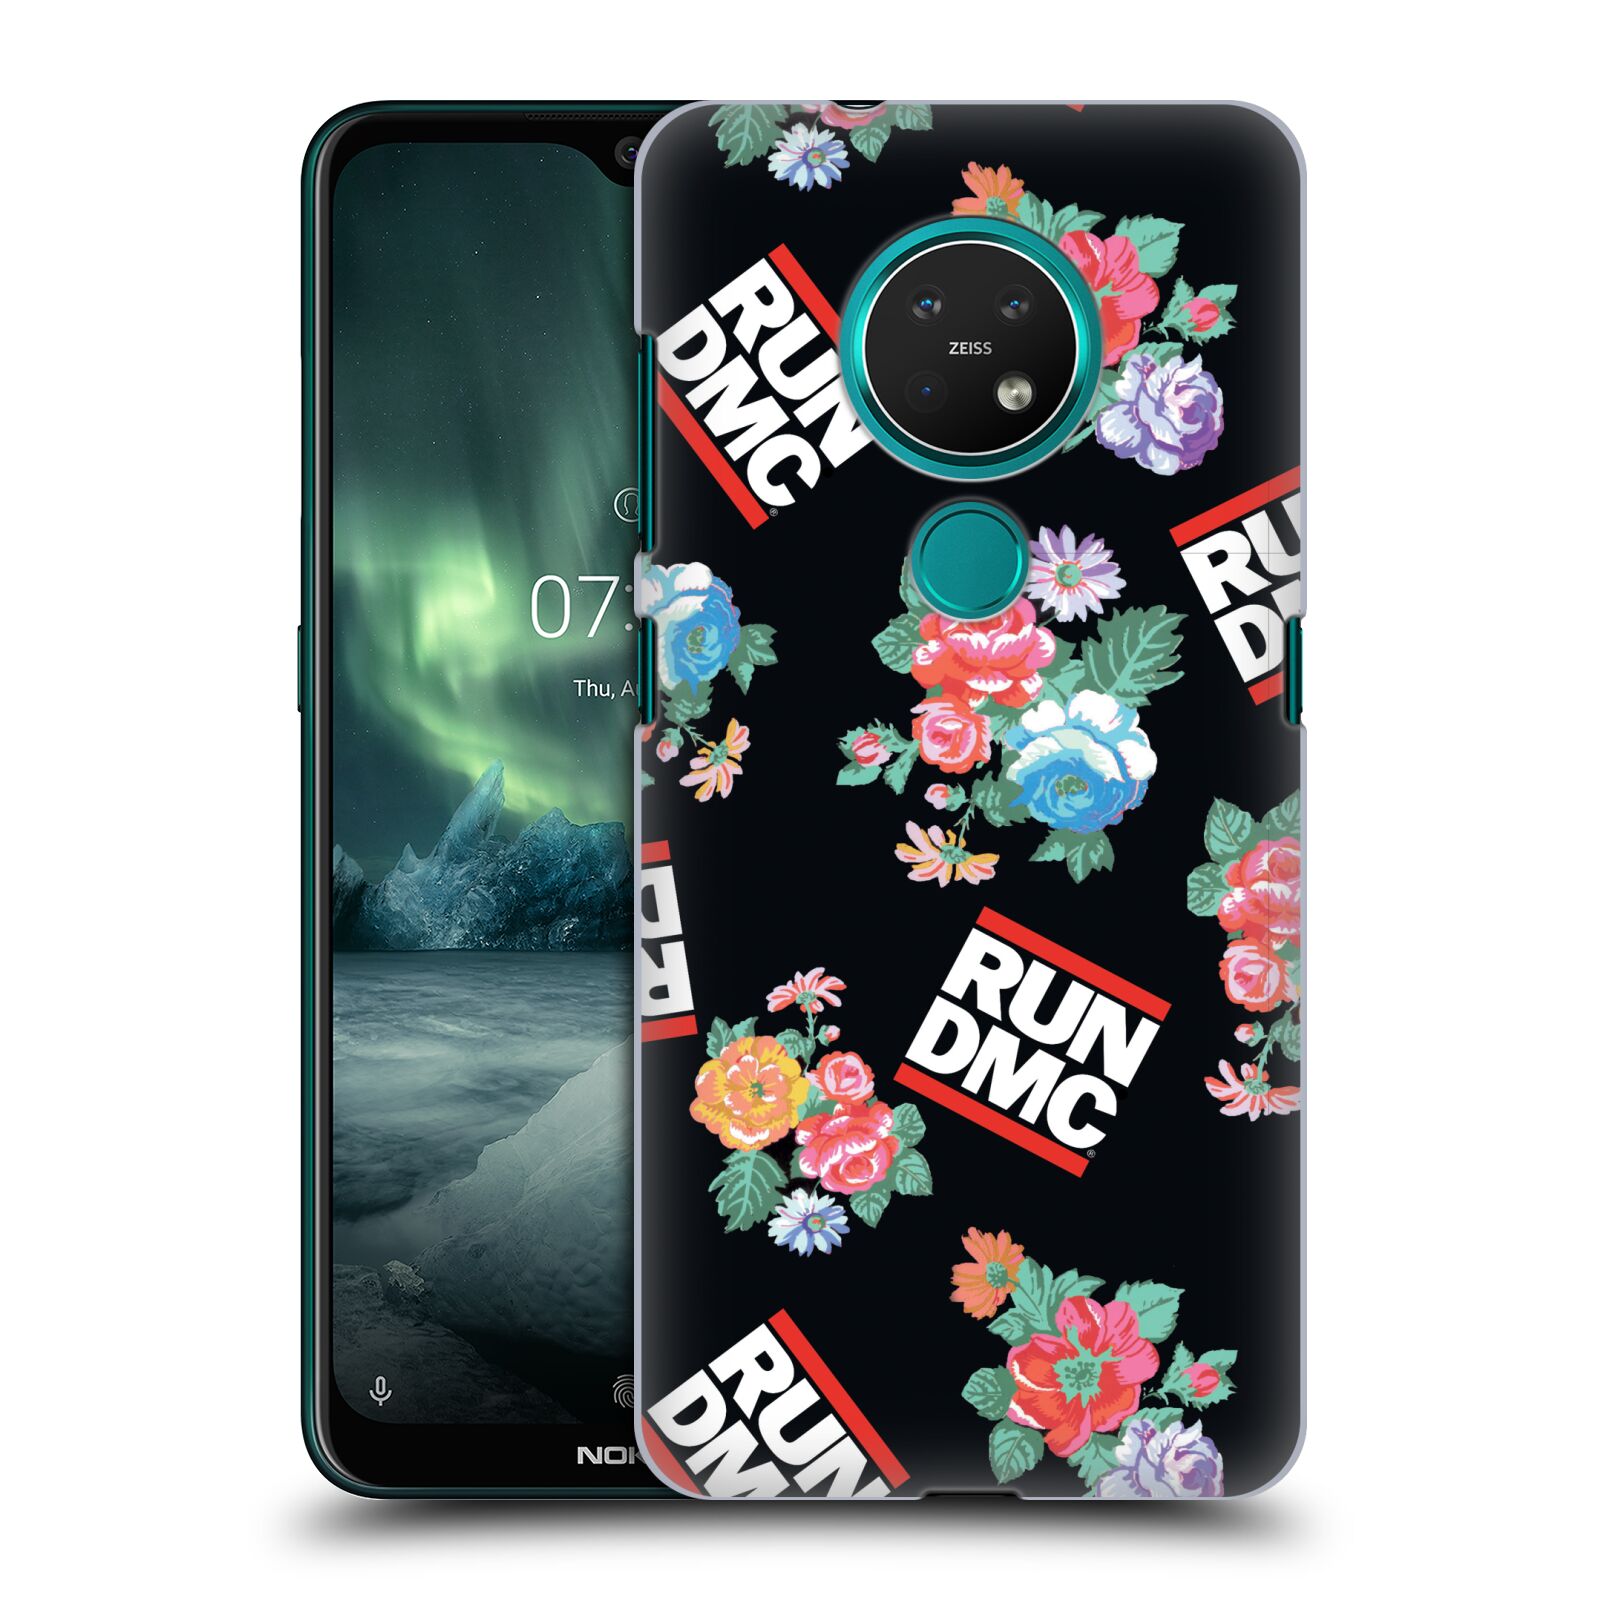 Pouzdro na mobil NOKIA 7.2 - HEAD CASE - rapová kapela Run DMC květiny černé pozadí